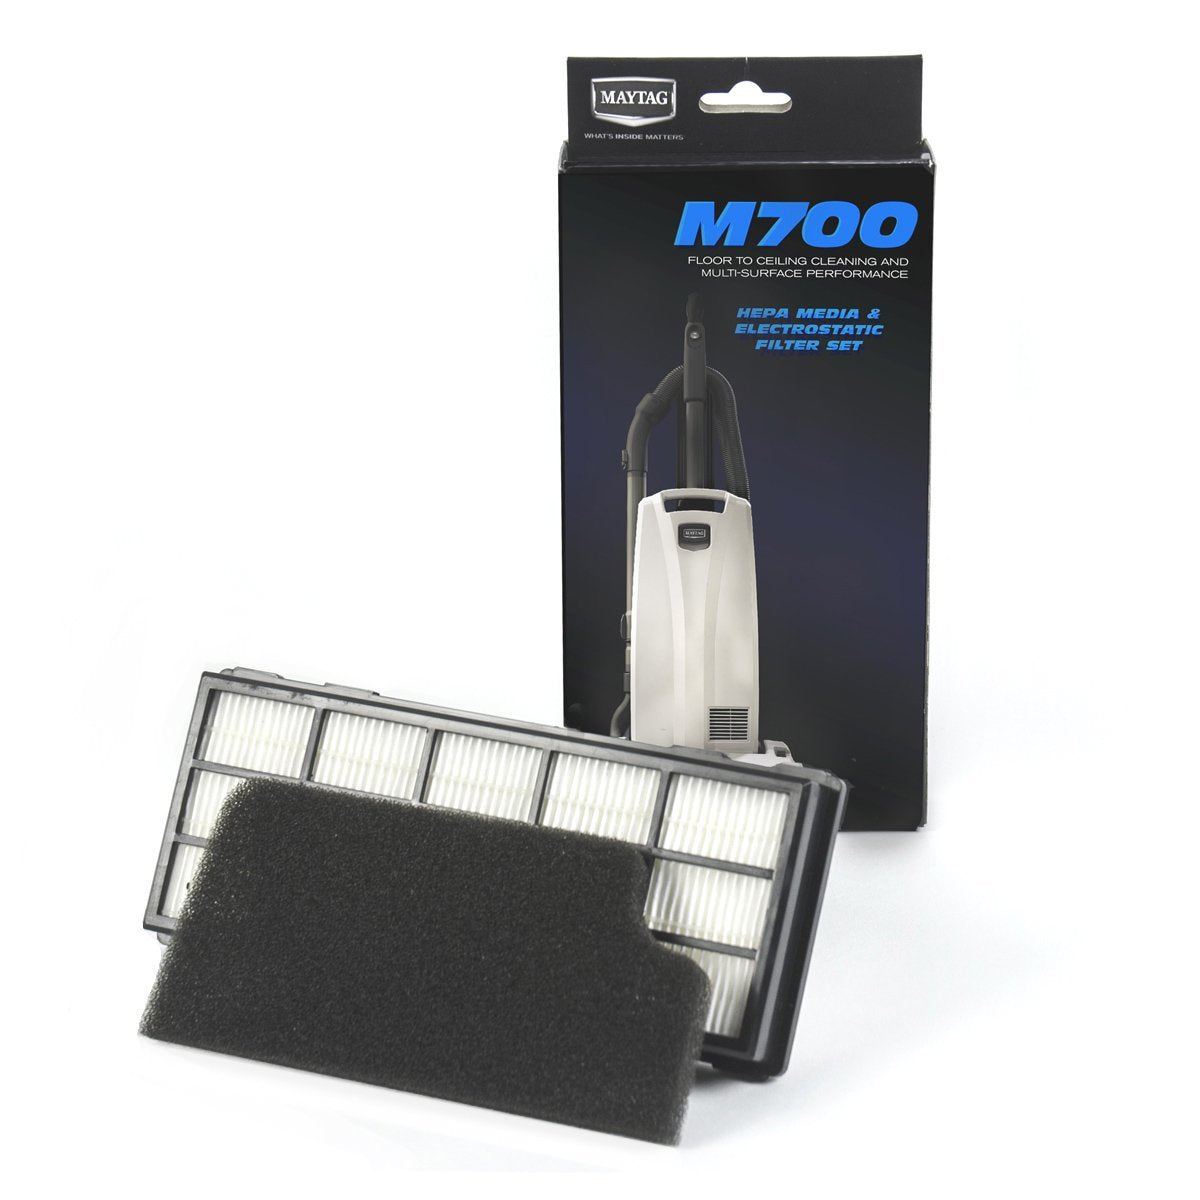 MAYTAG, MAYTAG -  M700 Vacuum Filter Set